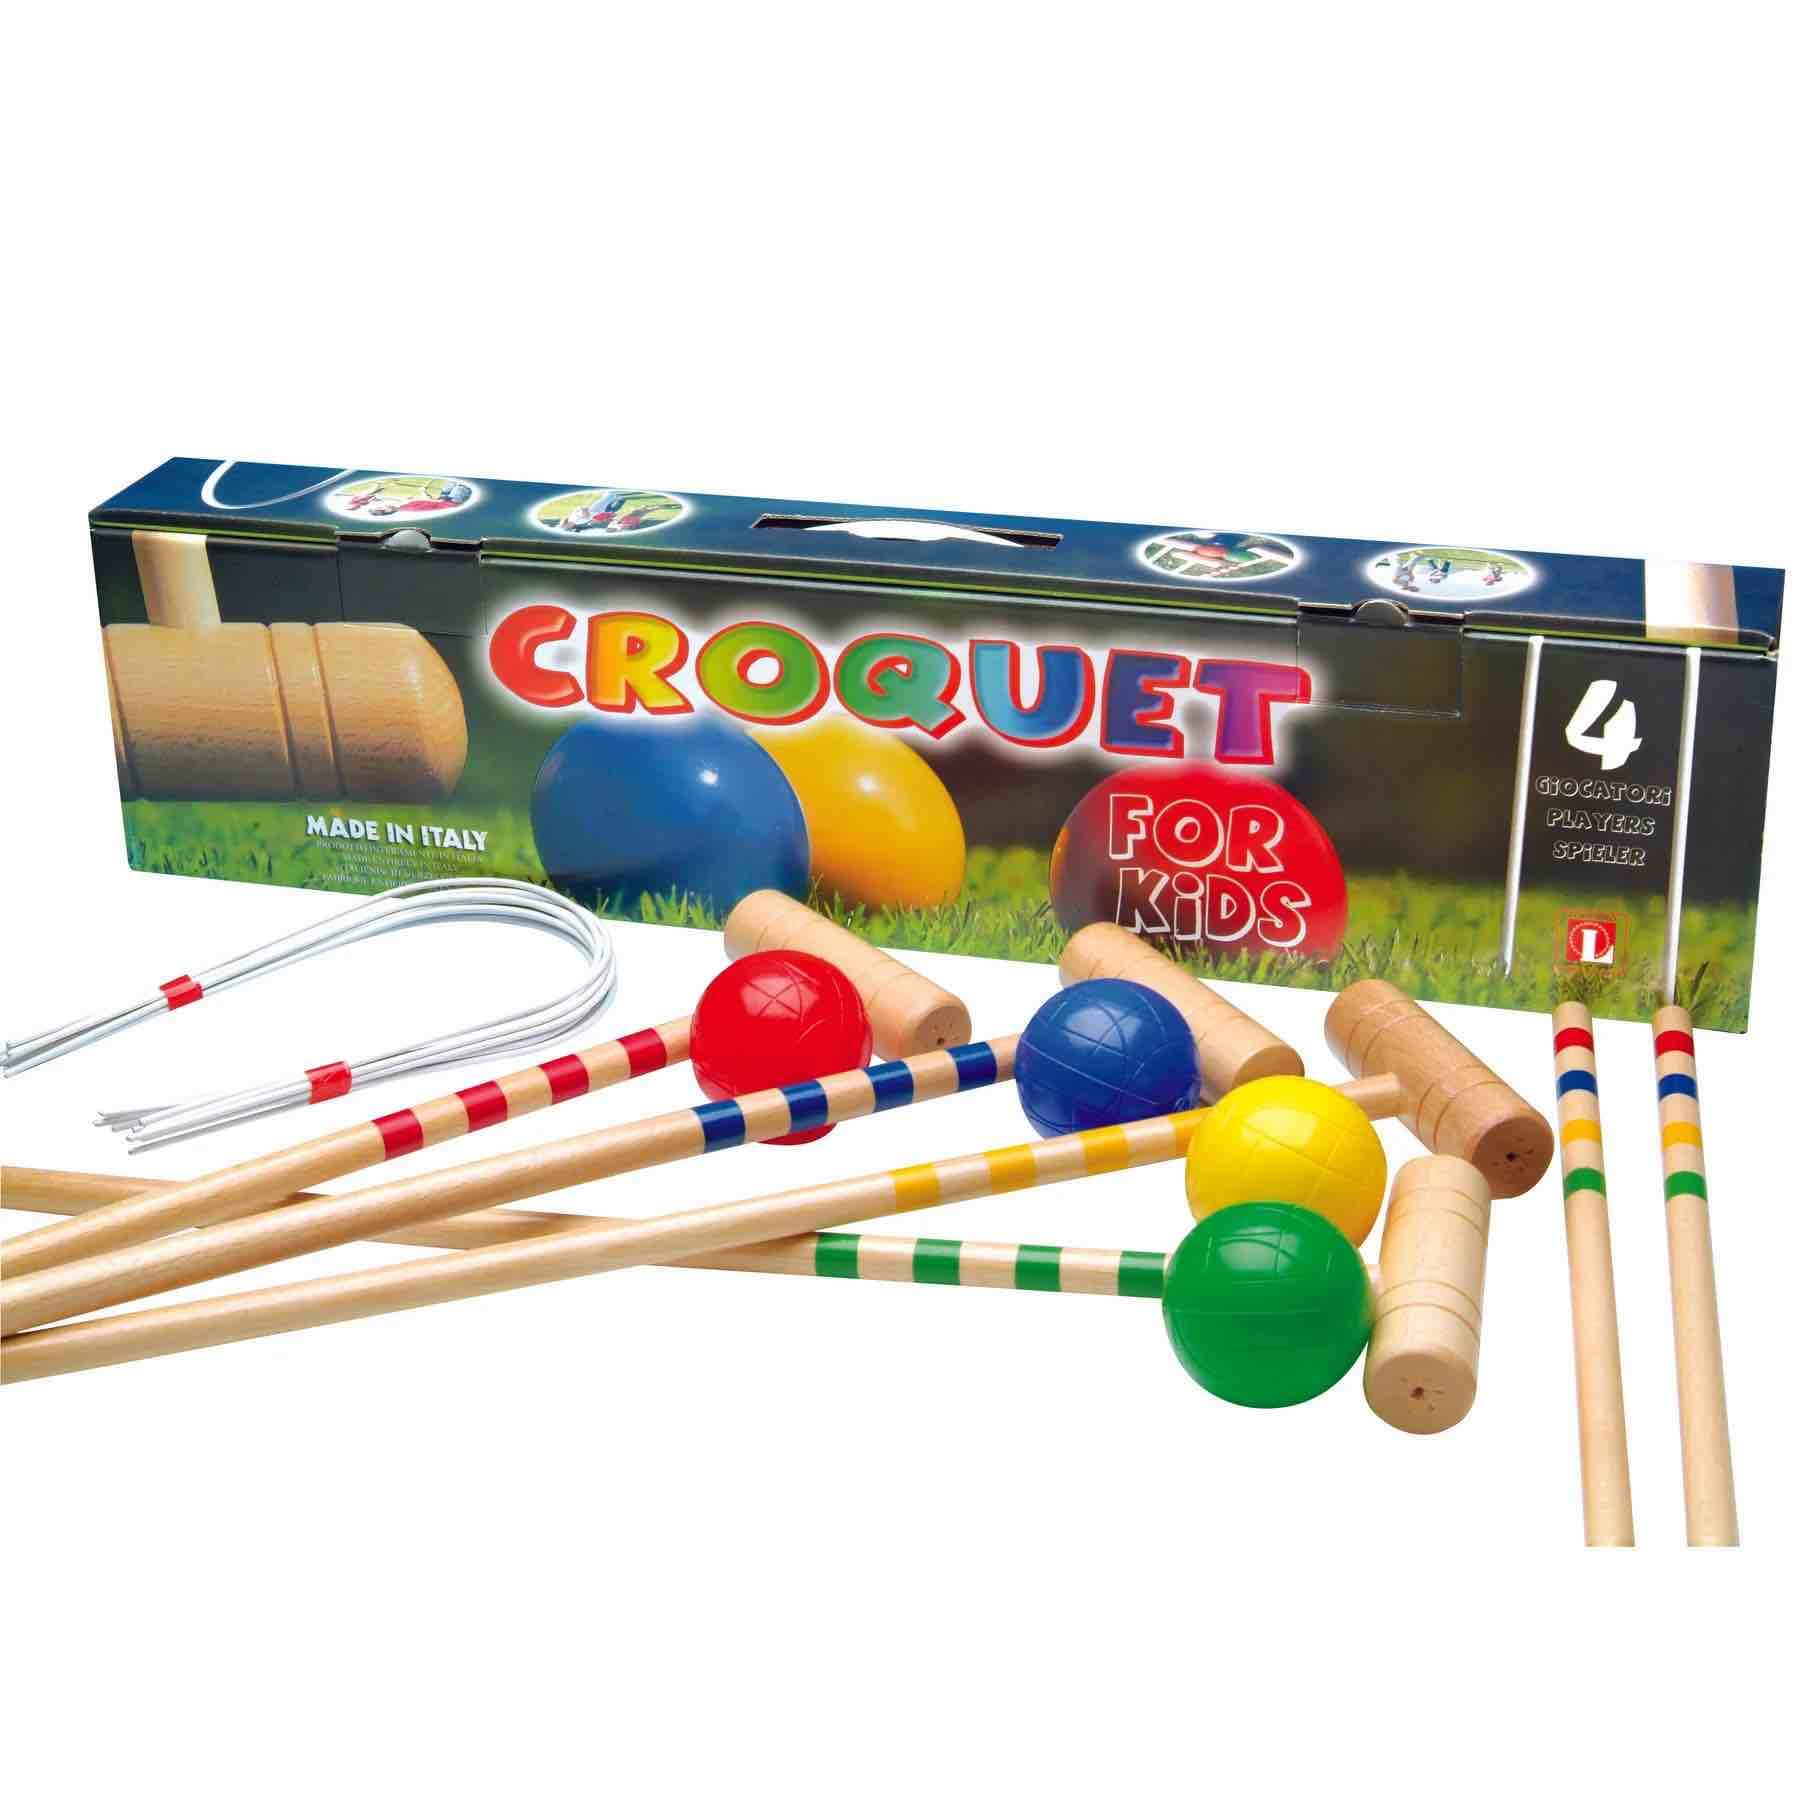 Kettler USA 4-PLAYER CHILDREN'S Kids Croquet Set, 10-06204, Made In Italy